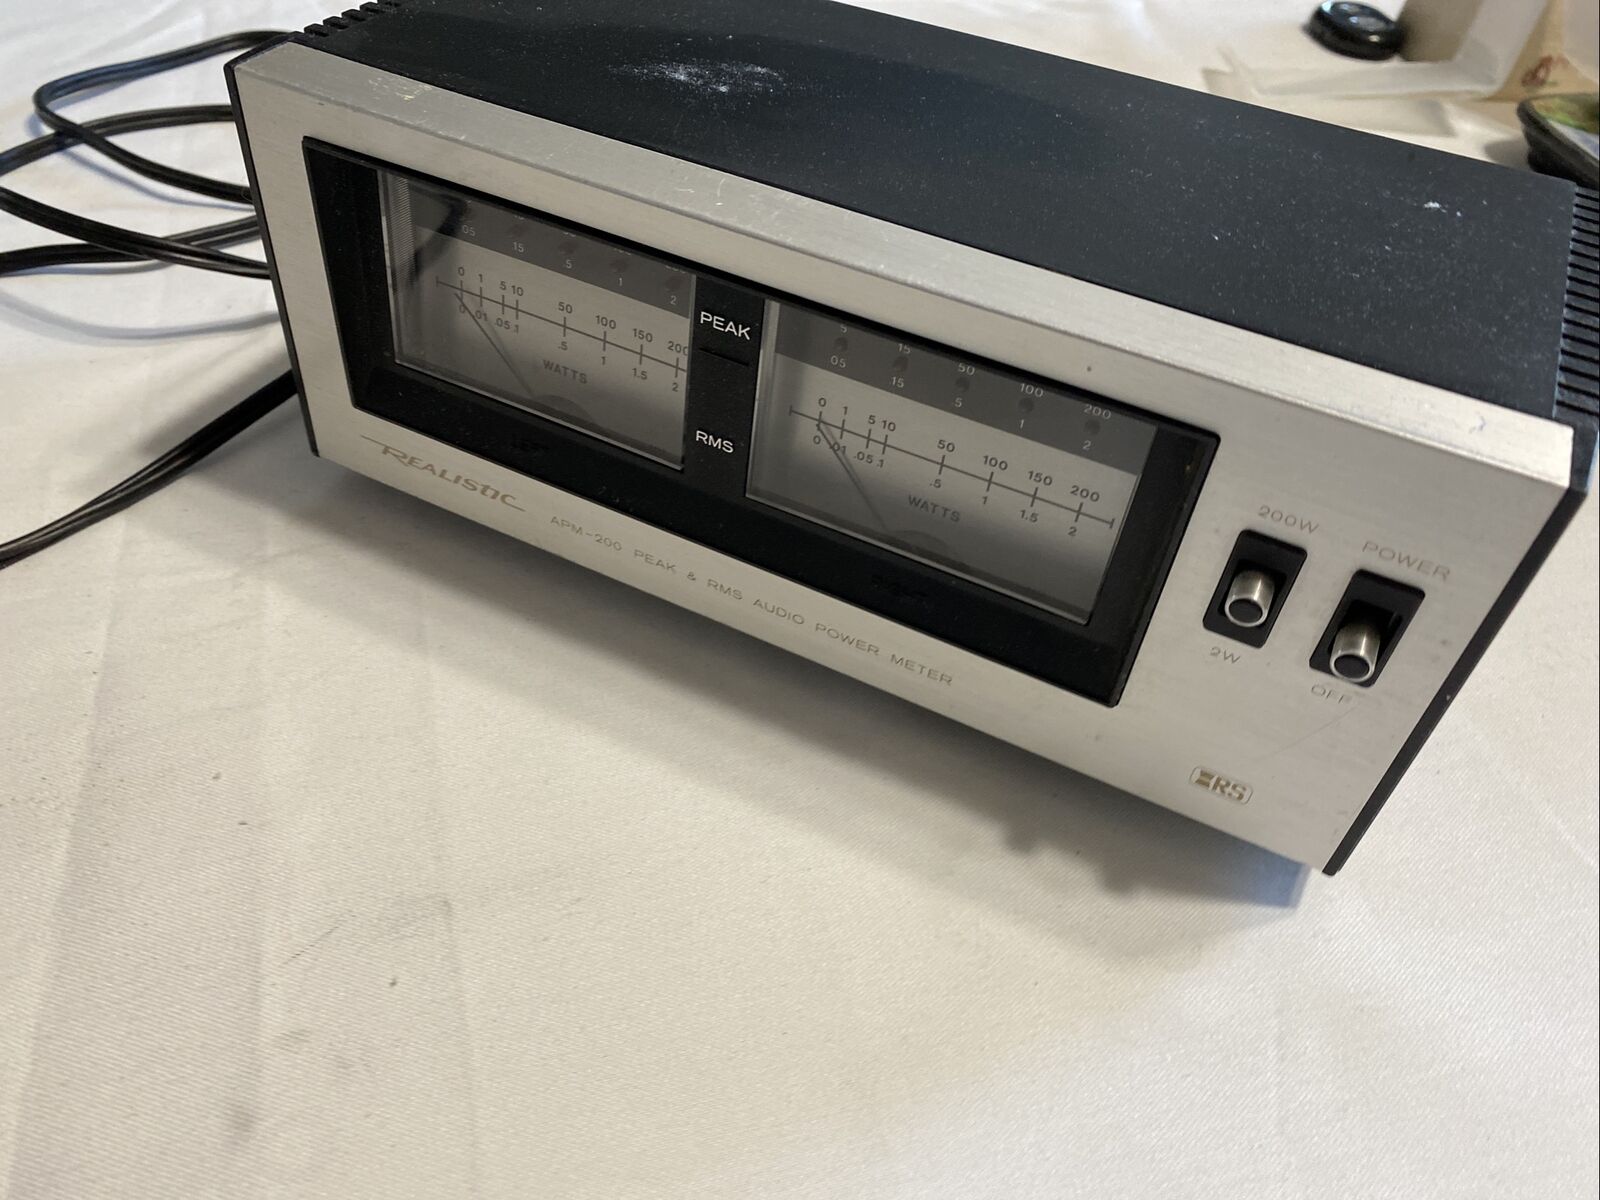 Realistic APM-200 Peak/RMS Audio Power Meter